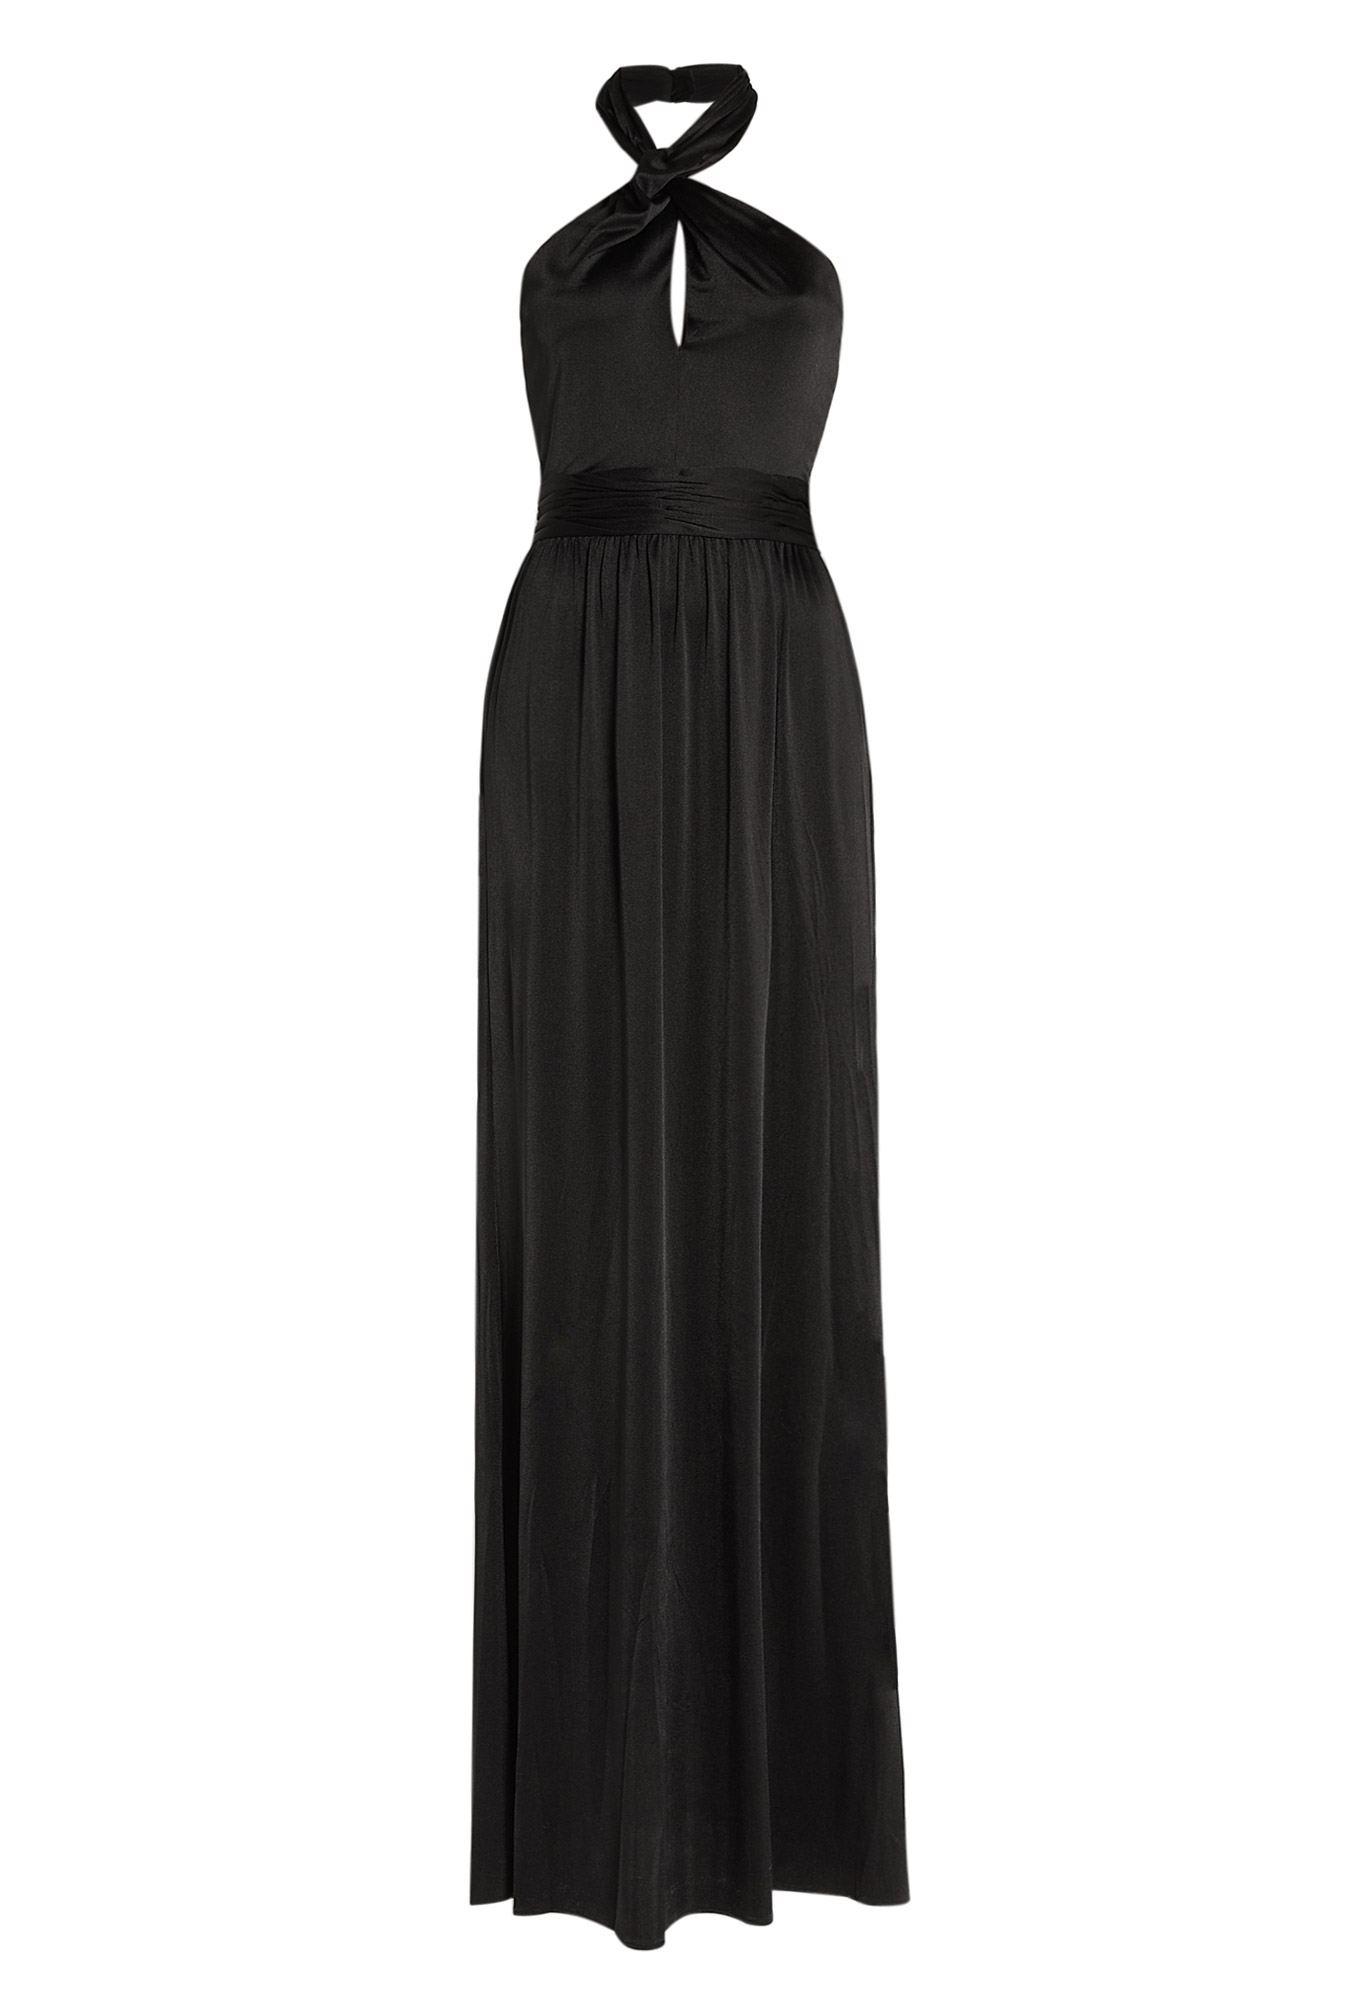 Halston Heritage Black Halter Neck Twist Maxi Dress in Black | Lyst